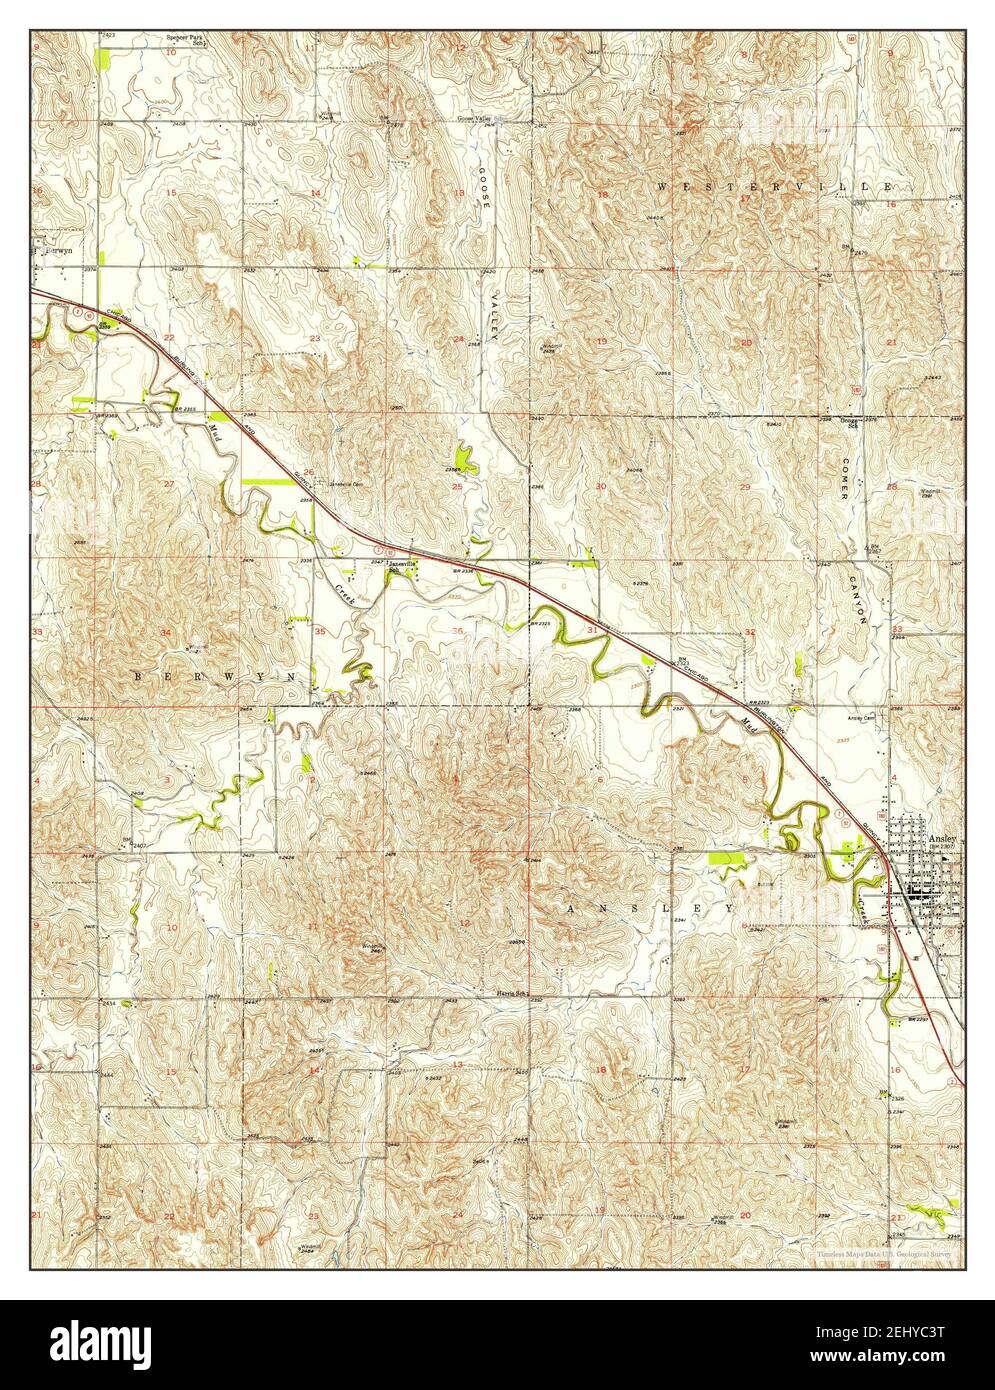 Ansley, Nebraska, map 1951, 1:24000, United States of America by Timeless Maps, data U.S. Geological Survey Stock Photo